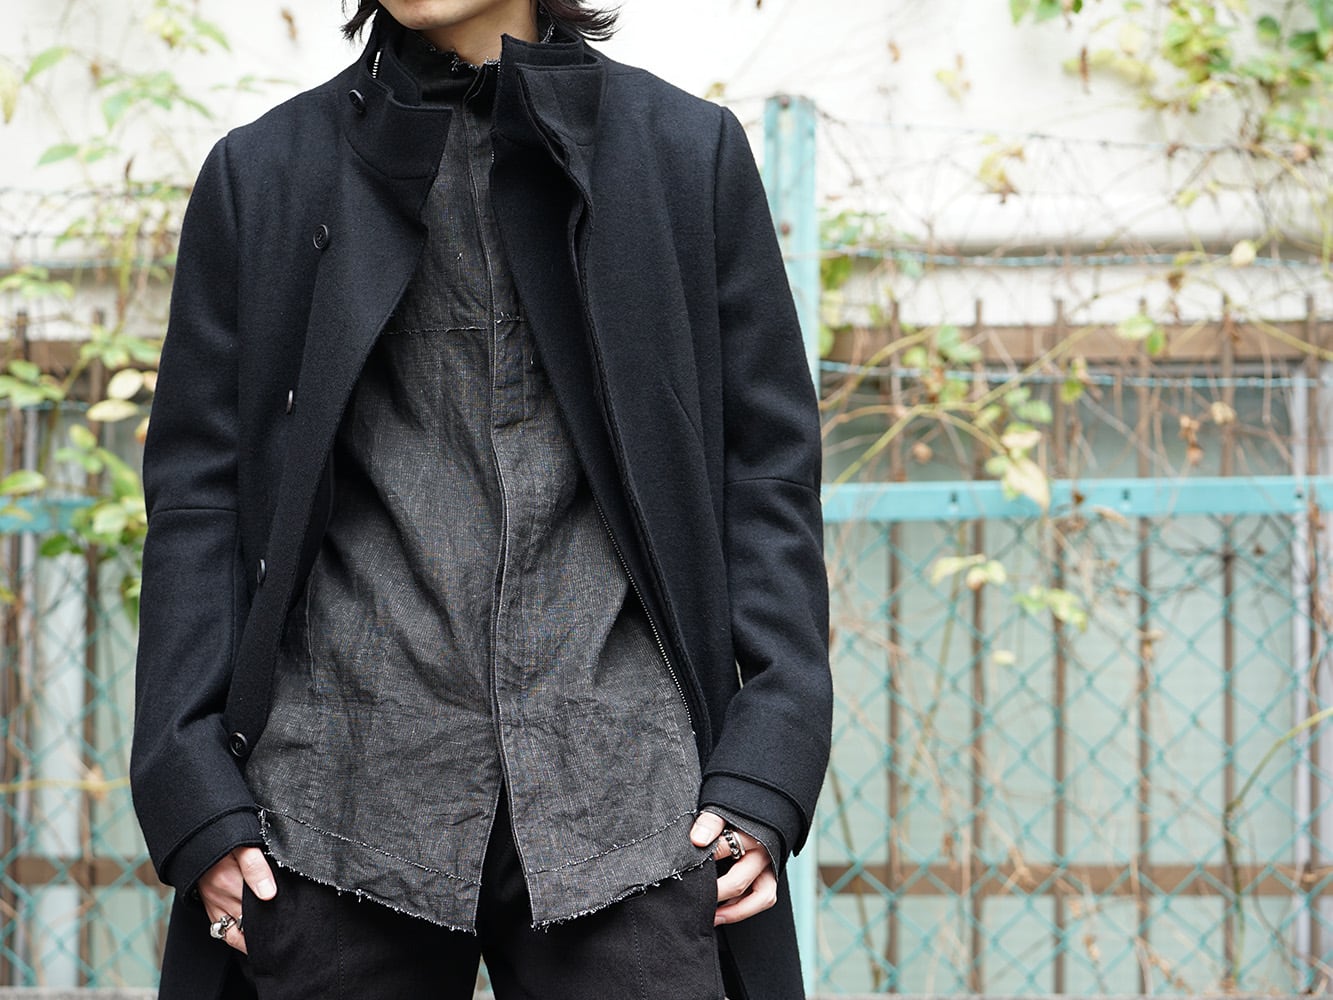 D.hygen High neck Coat Black Winter style - FASCINATE BLOG